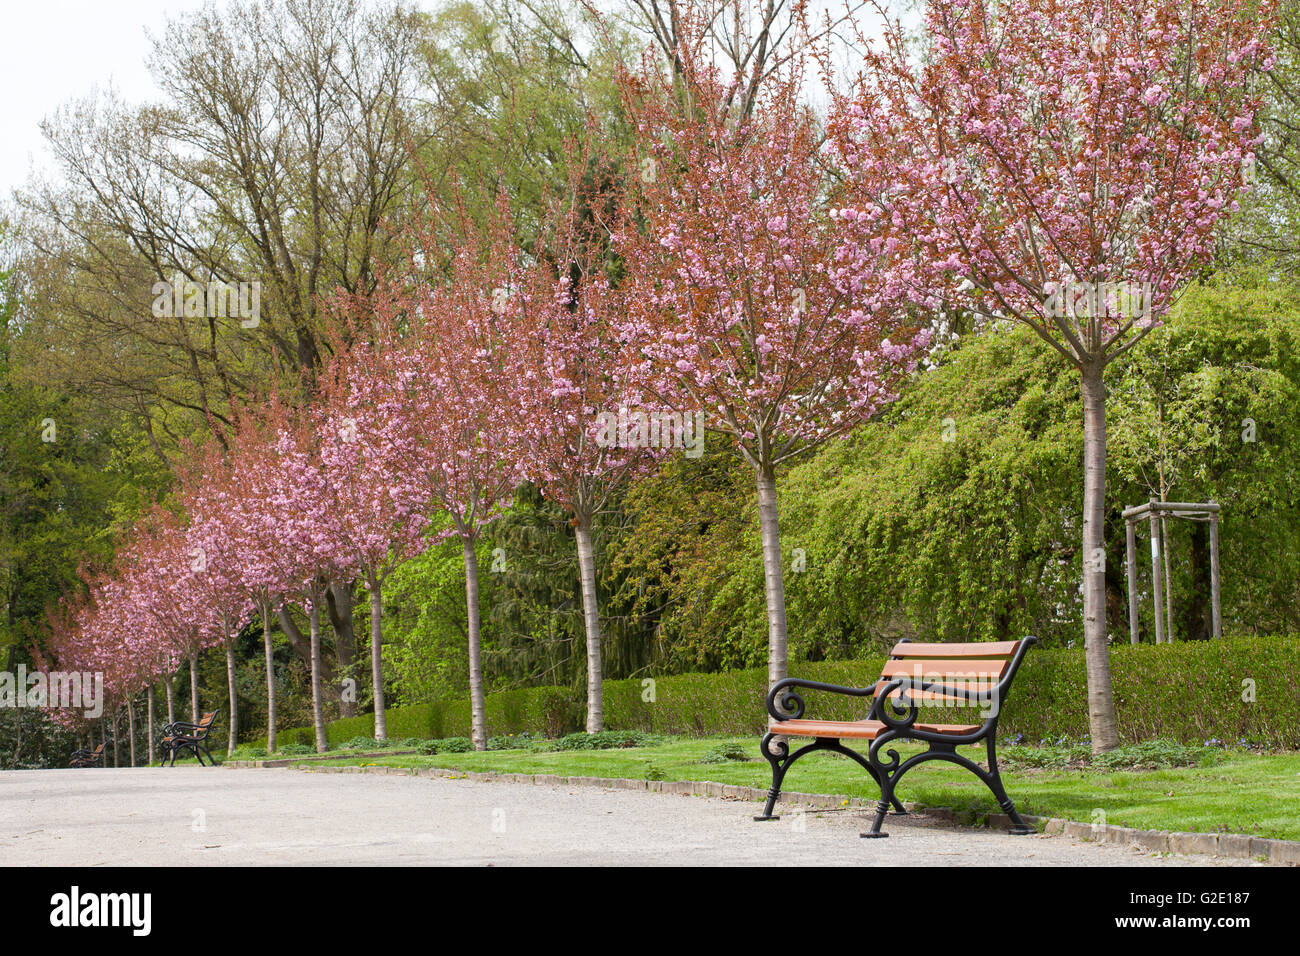 Avenue with flowering Japanese cherry trees, Rombergpark, Dortmund, Ruhr district, North Rhine-Westphalia, Germany Stock Photo